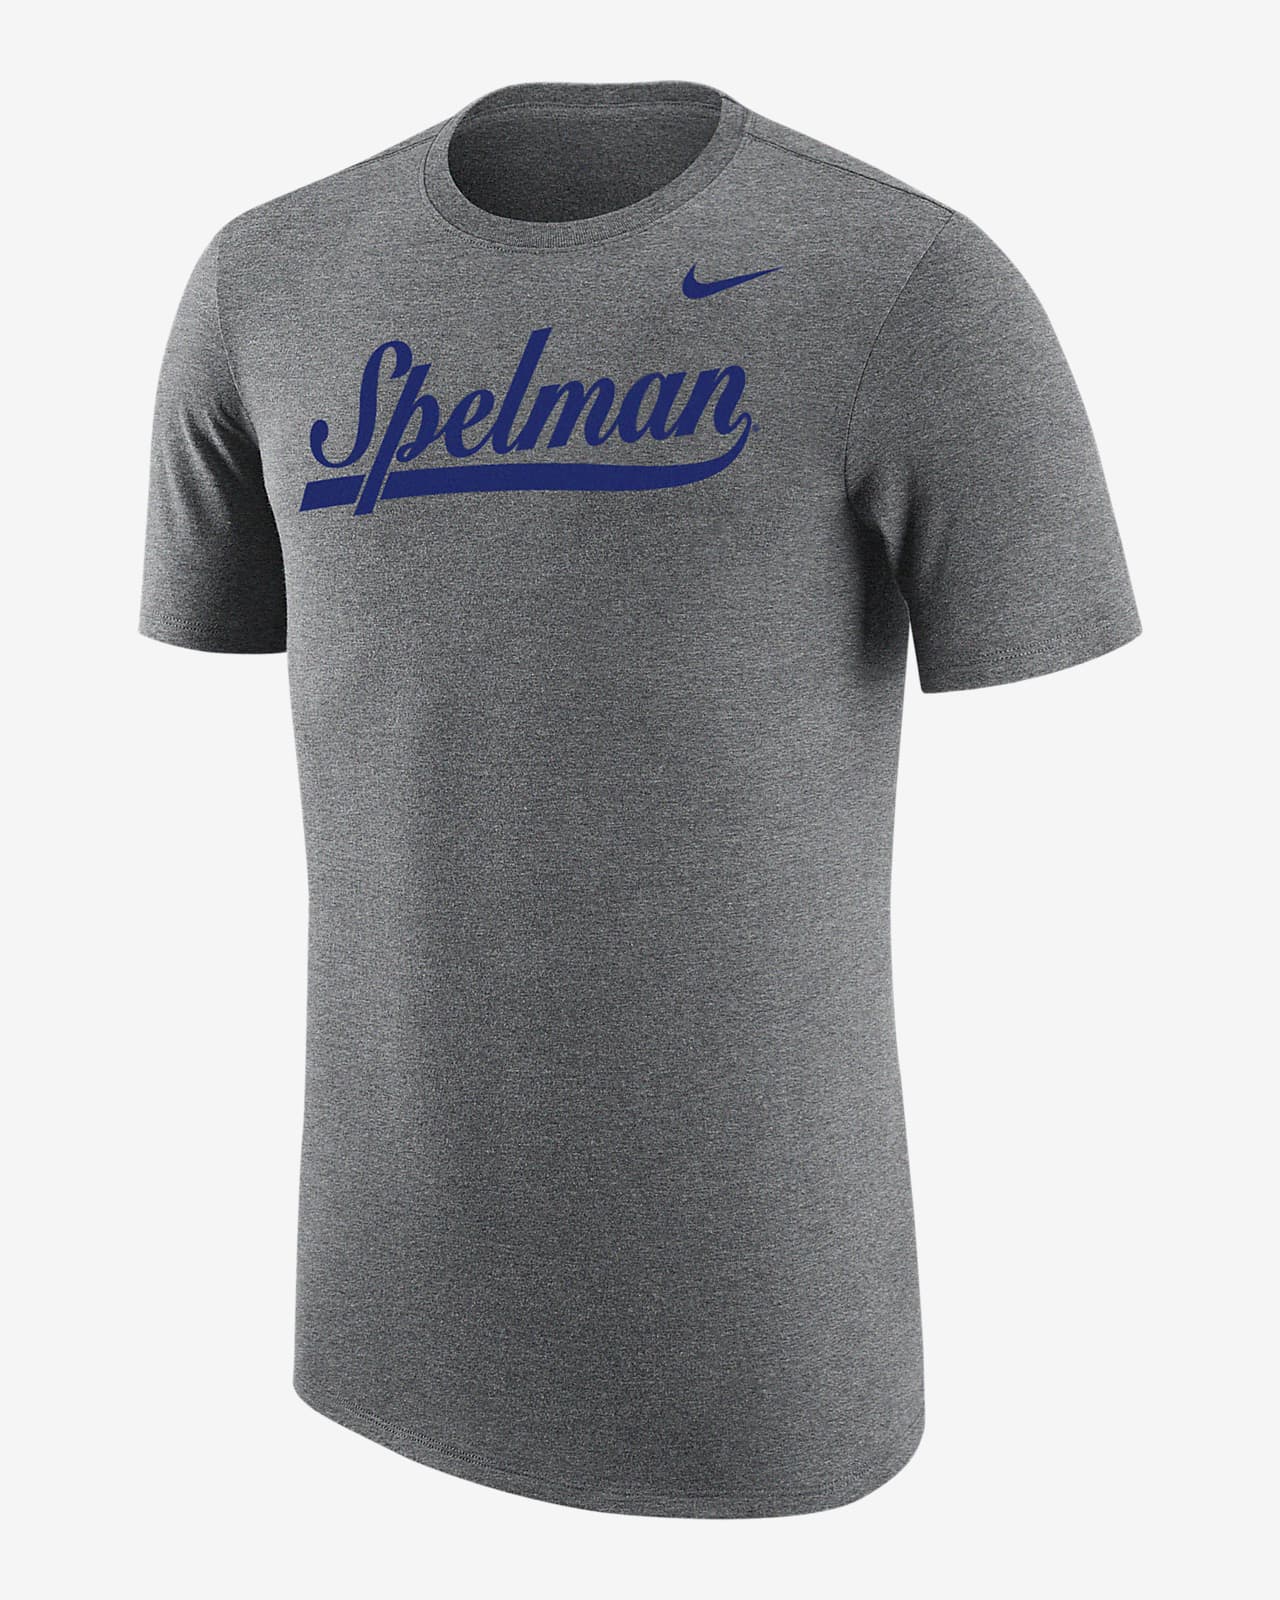 Playera universitaria Nike para hombre Spelman